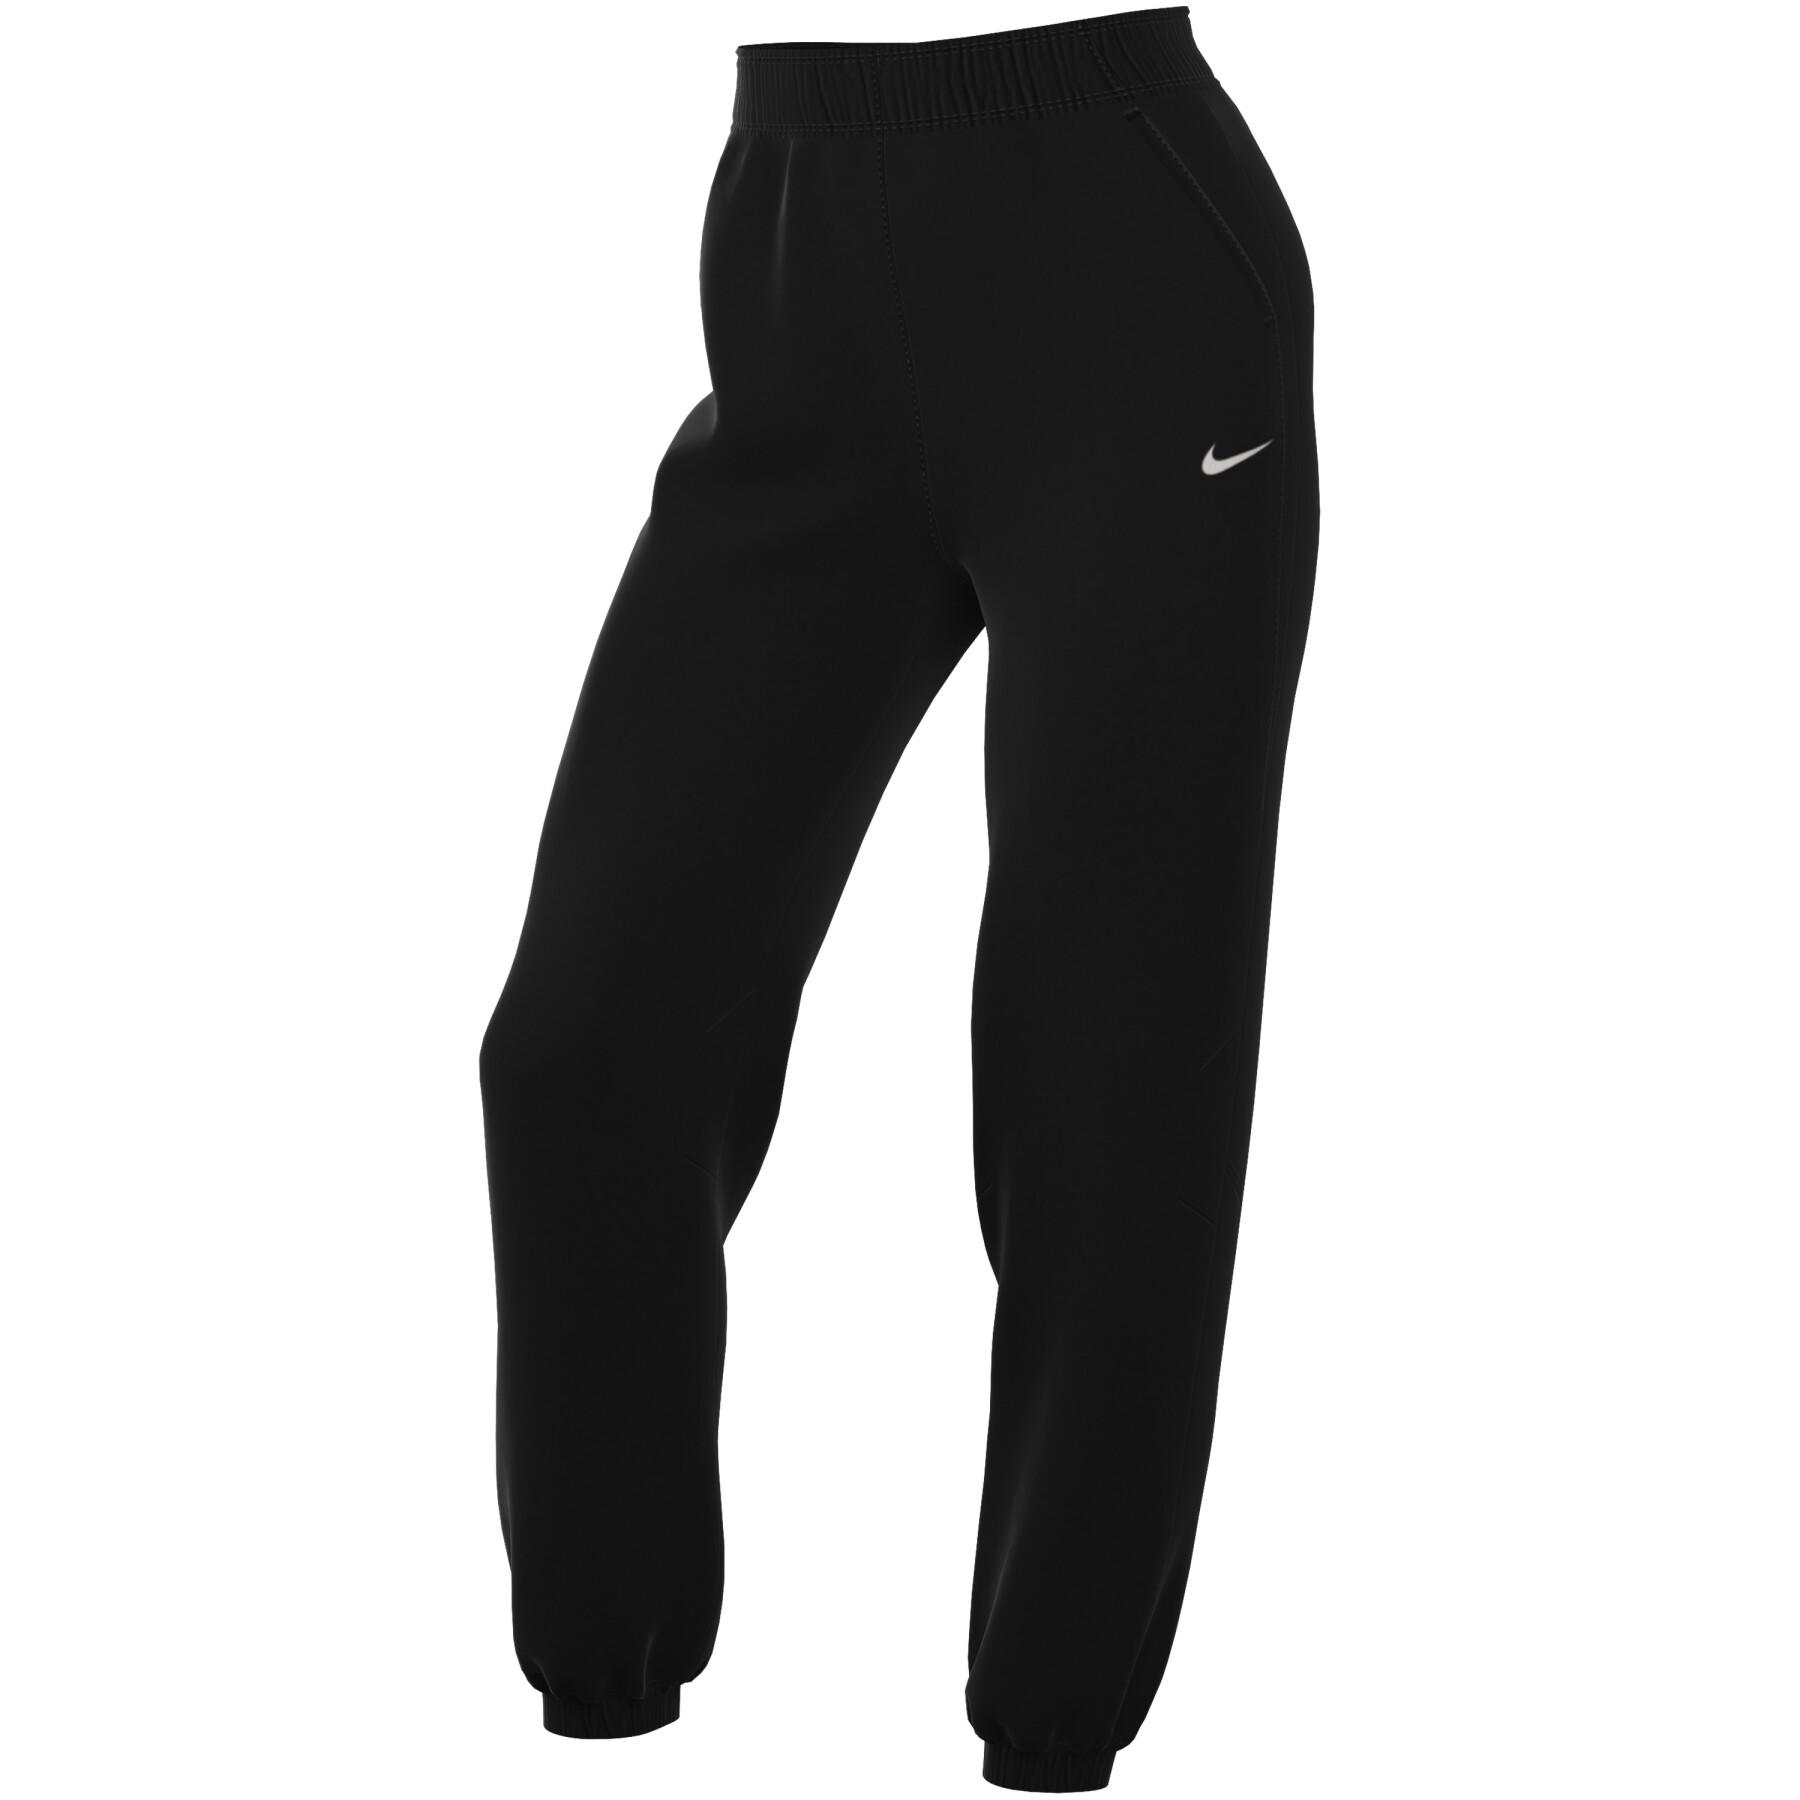 Women's 7/8 jogging suit Nike Dri-FIT Fast